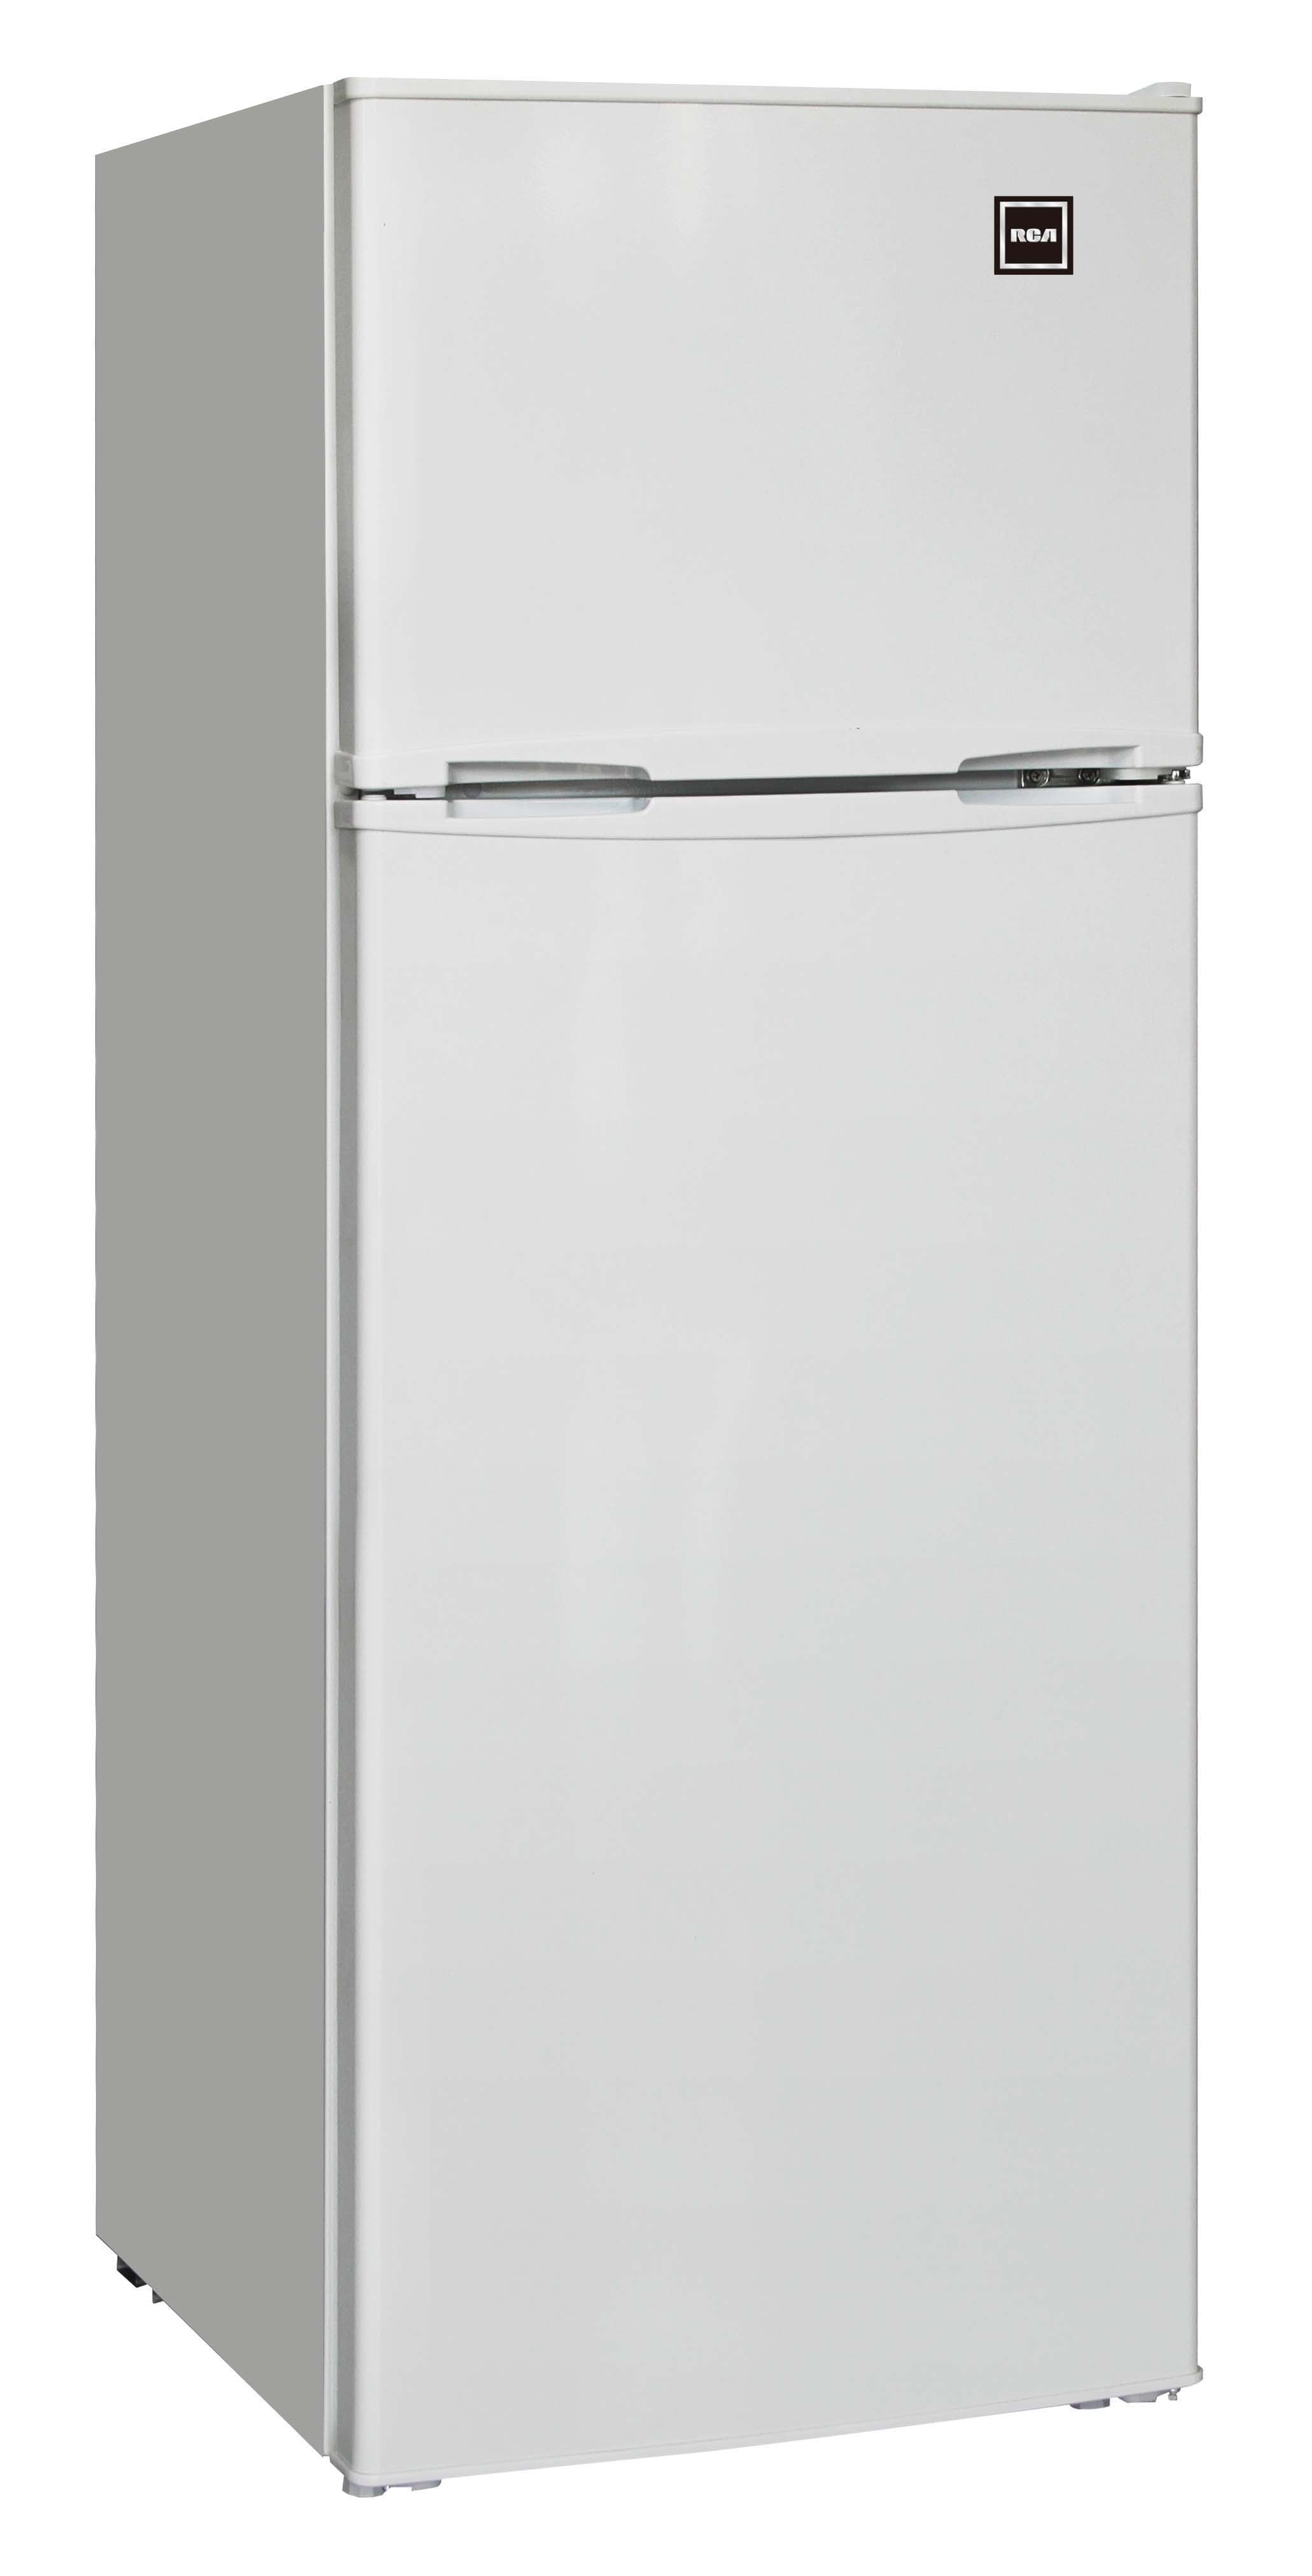 Rca 7 5 Cu Ft Top Freezer Refrigerator Rfr741 White Weltecinc